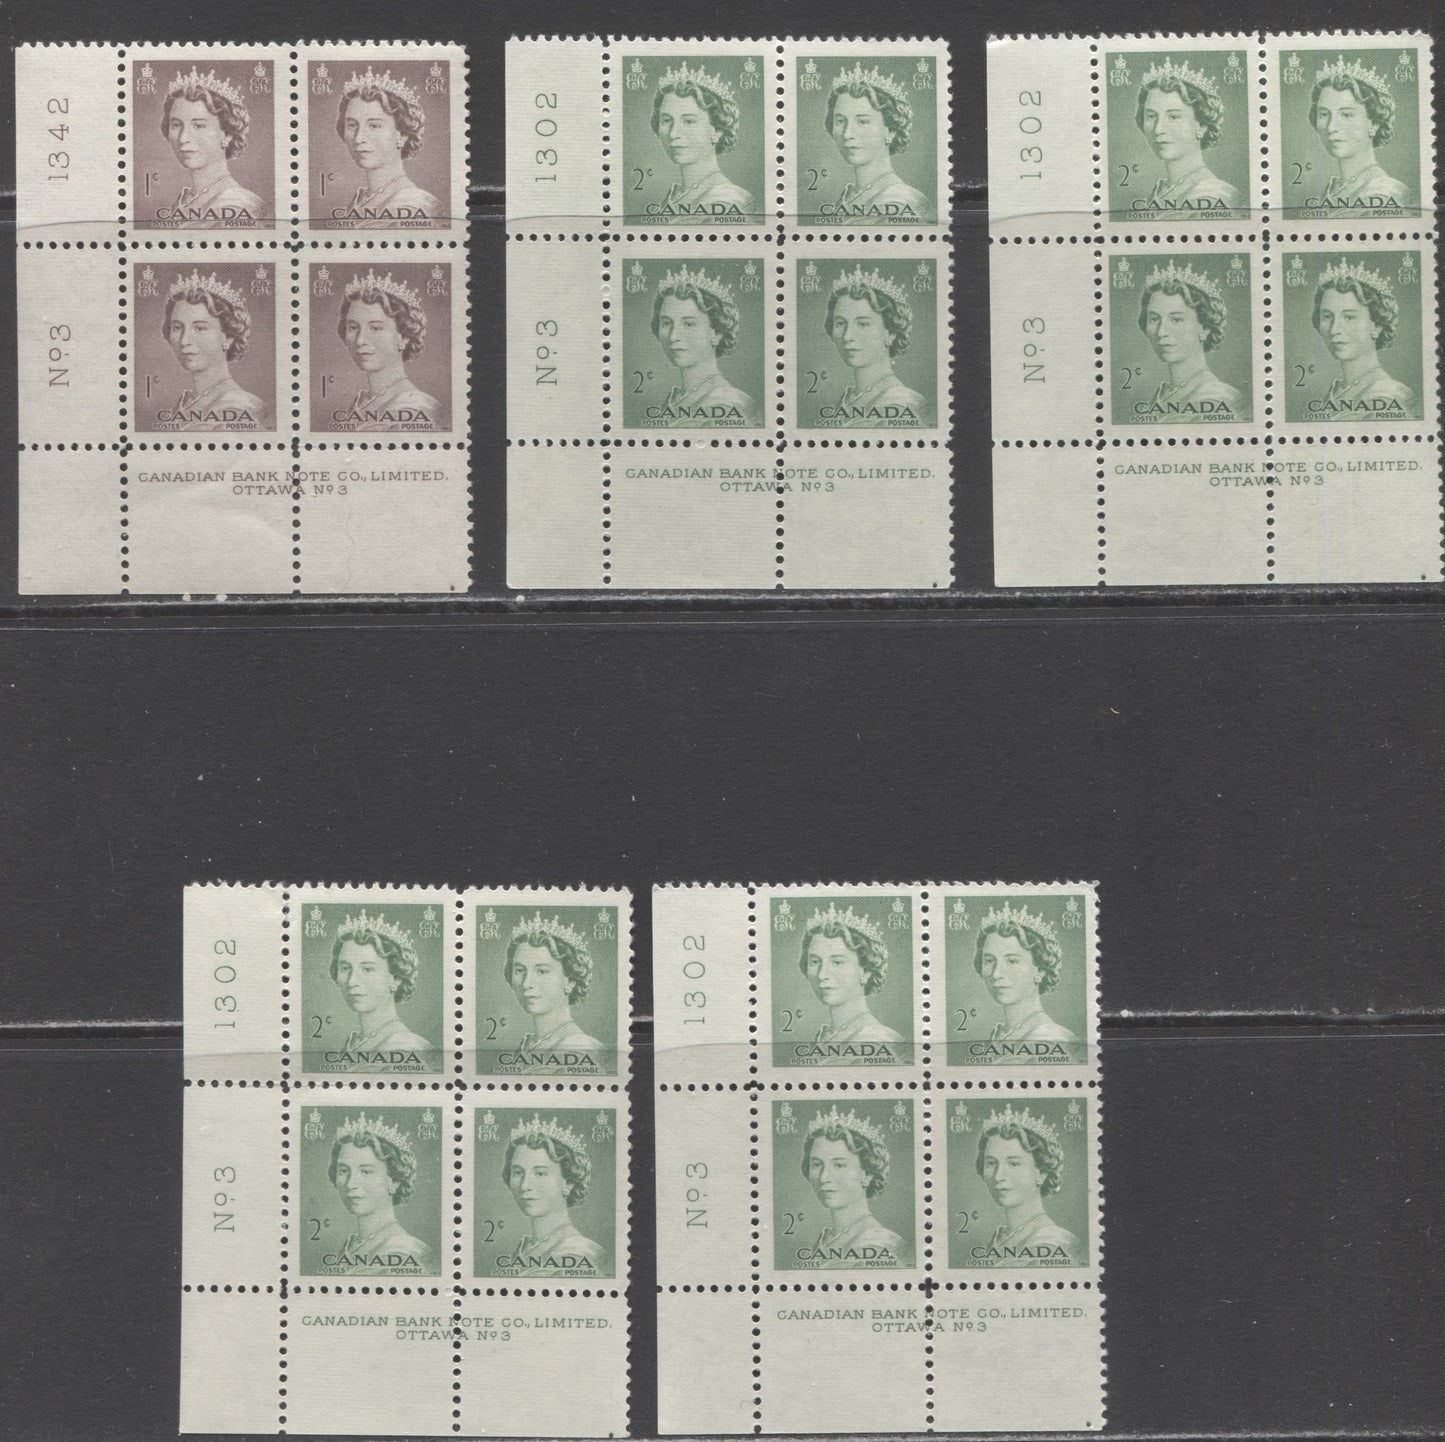 Lot 236 Canada #325-326 1c-2c Violet Brown & Pale Green Queen Elizabeth II, 1953-1954 Karsh Issue, 5 VFNH LL Plate 3 Inscription Blocks, Different Perfs